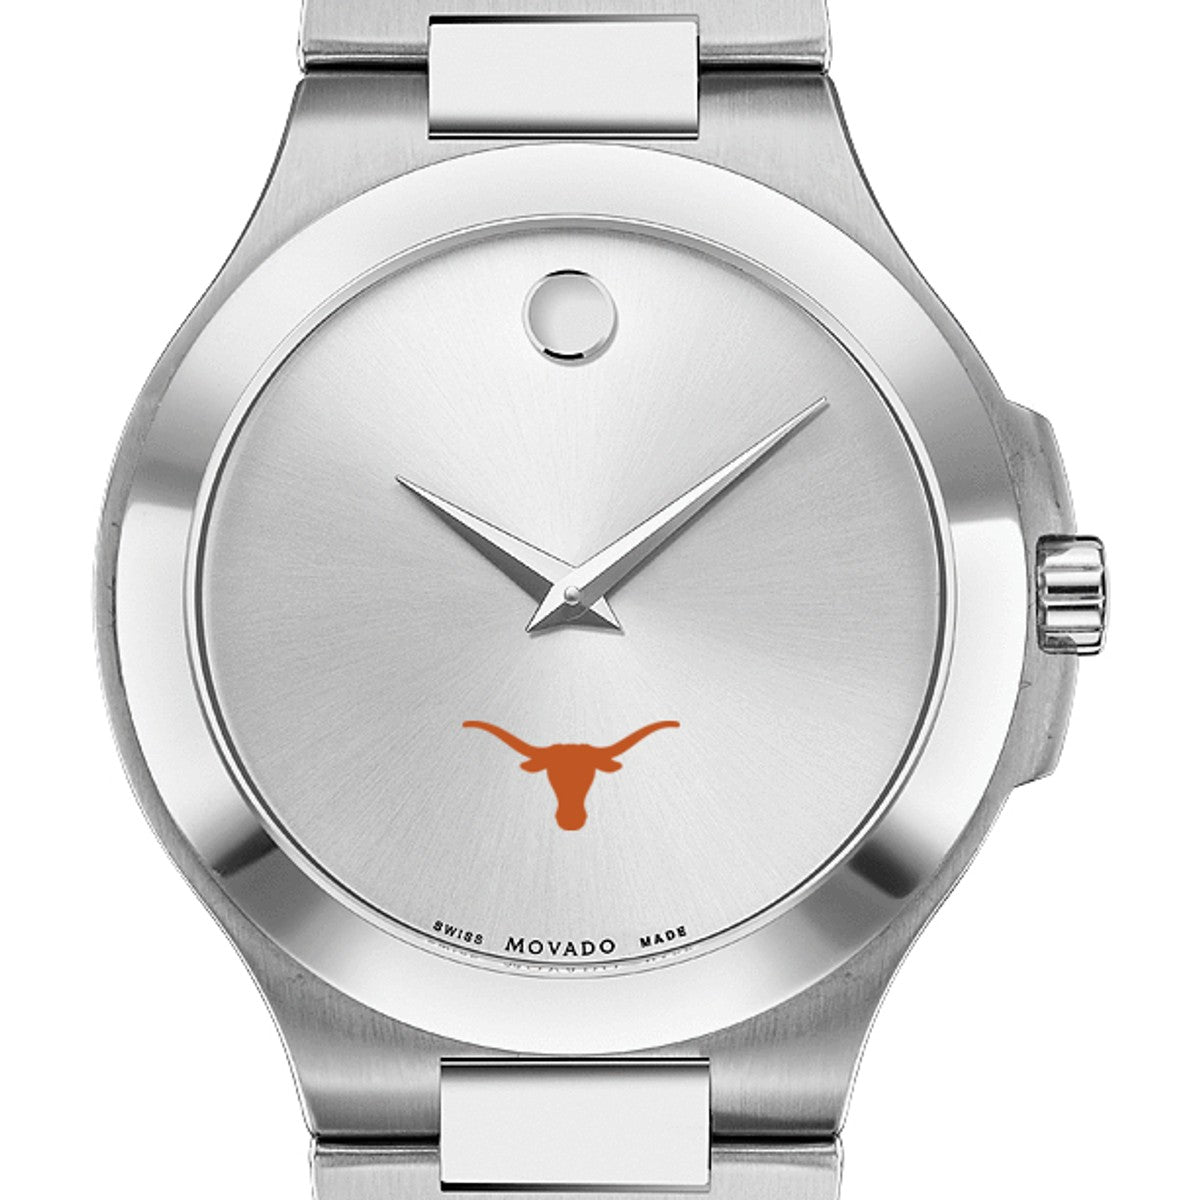 Austin Watch - What's it worth? | WatchUSeek Watch Forums